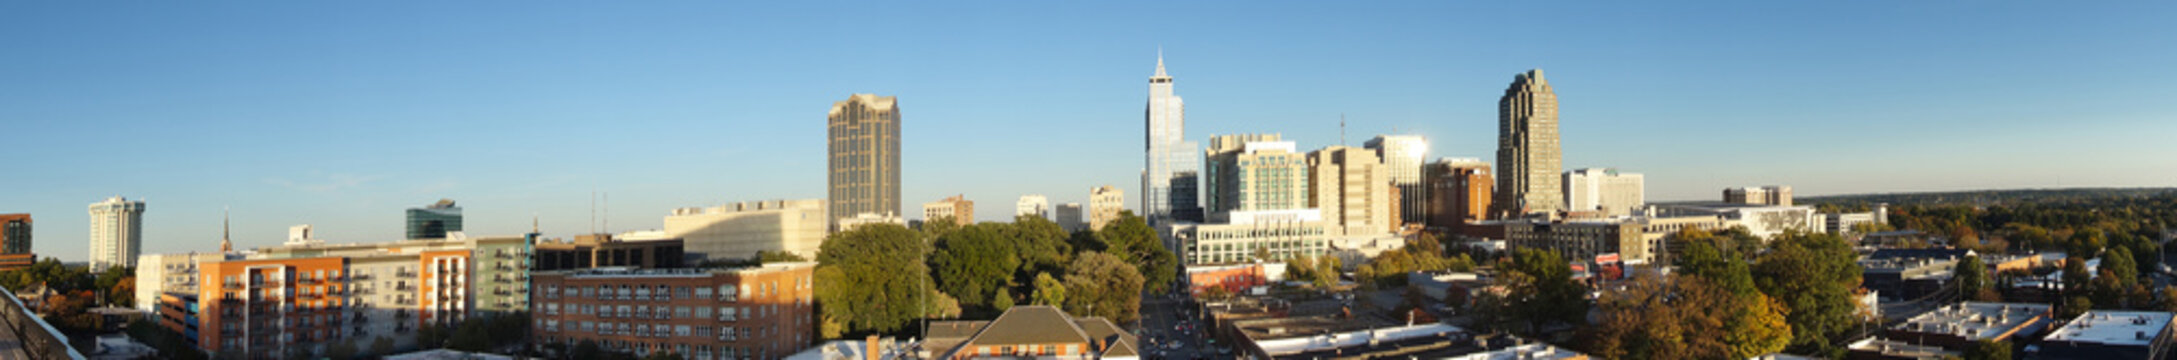 Downtown Raleigh panorama